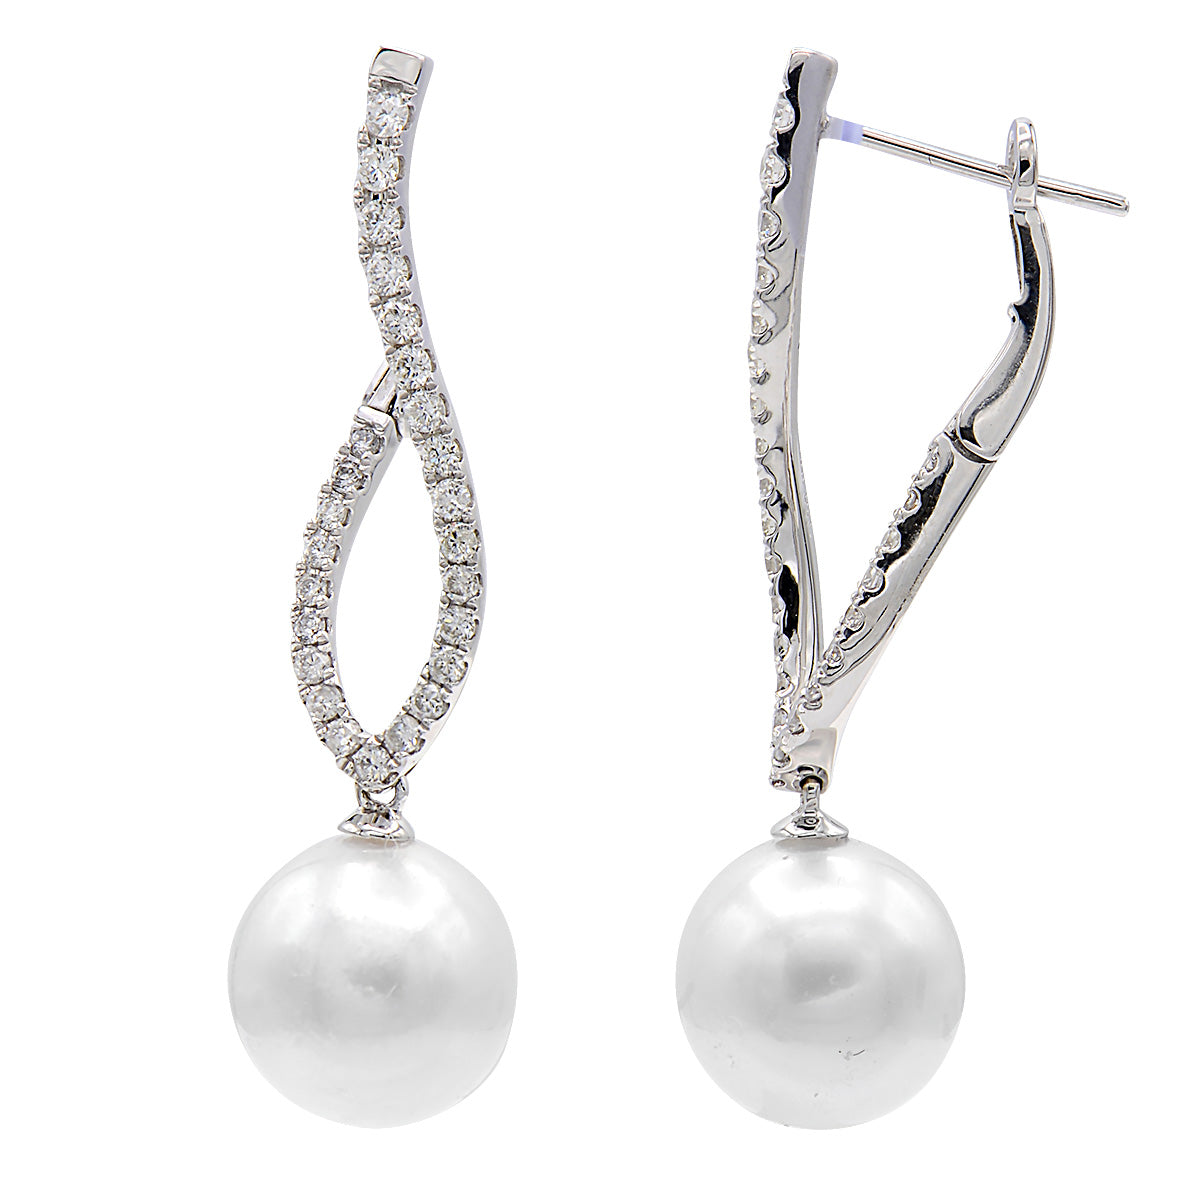 18KW White South Sea Pearl Earrings, 10-11mm